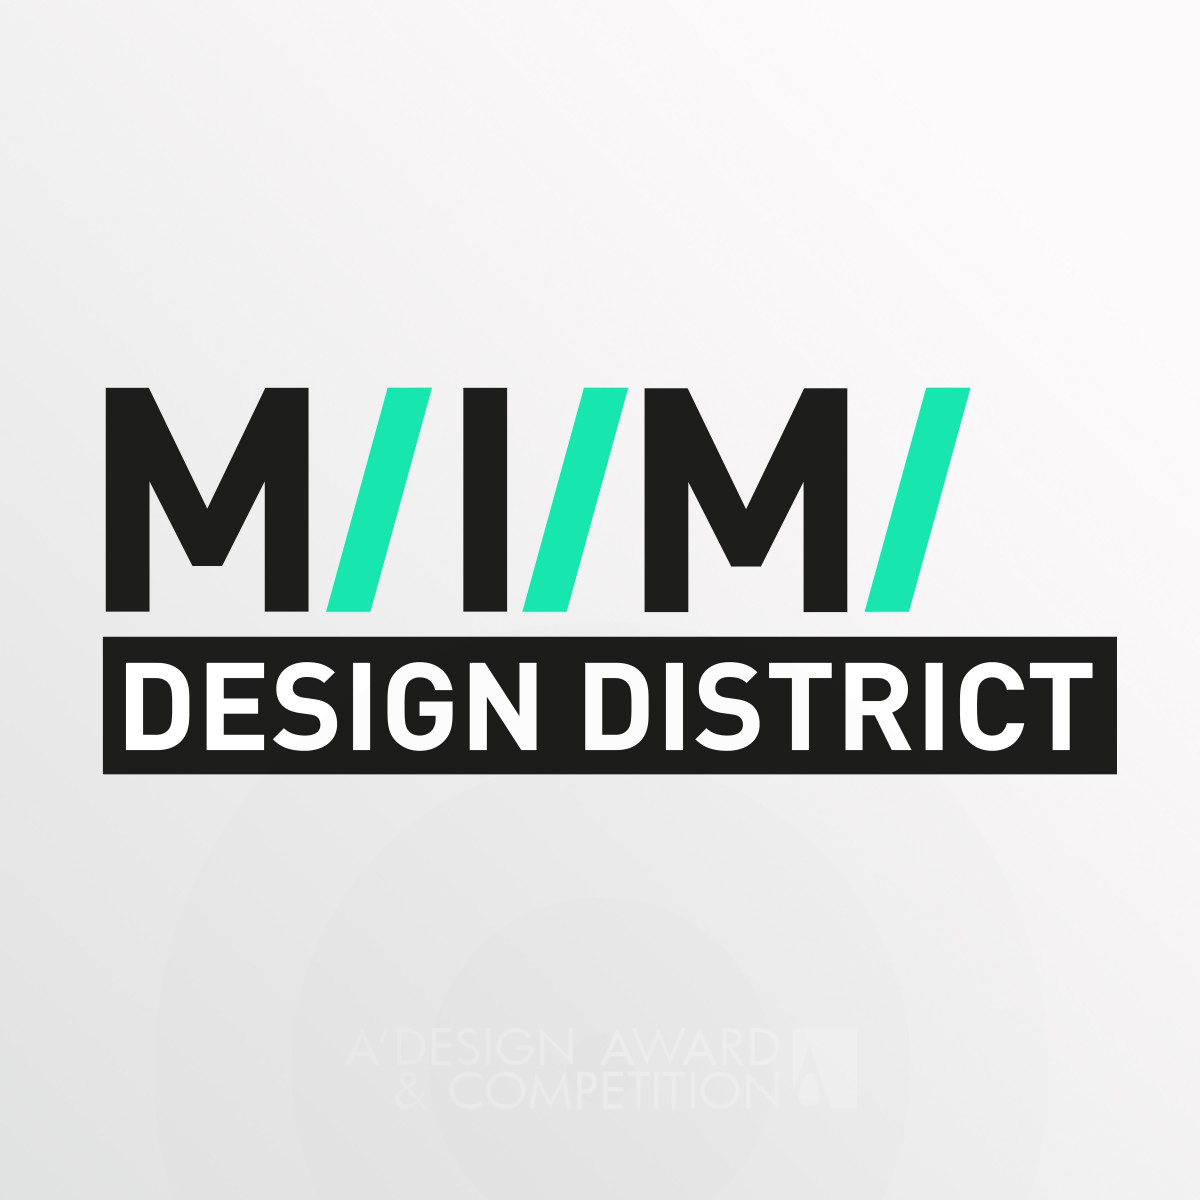 M/I/M/ Design District Corporate Identity by Francesco Paternoster